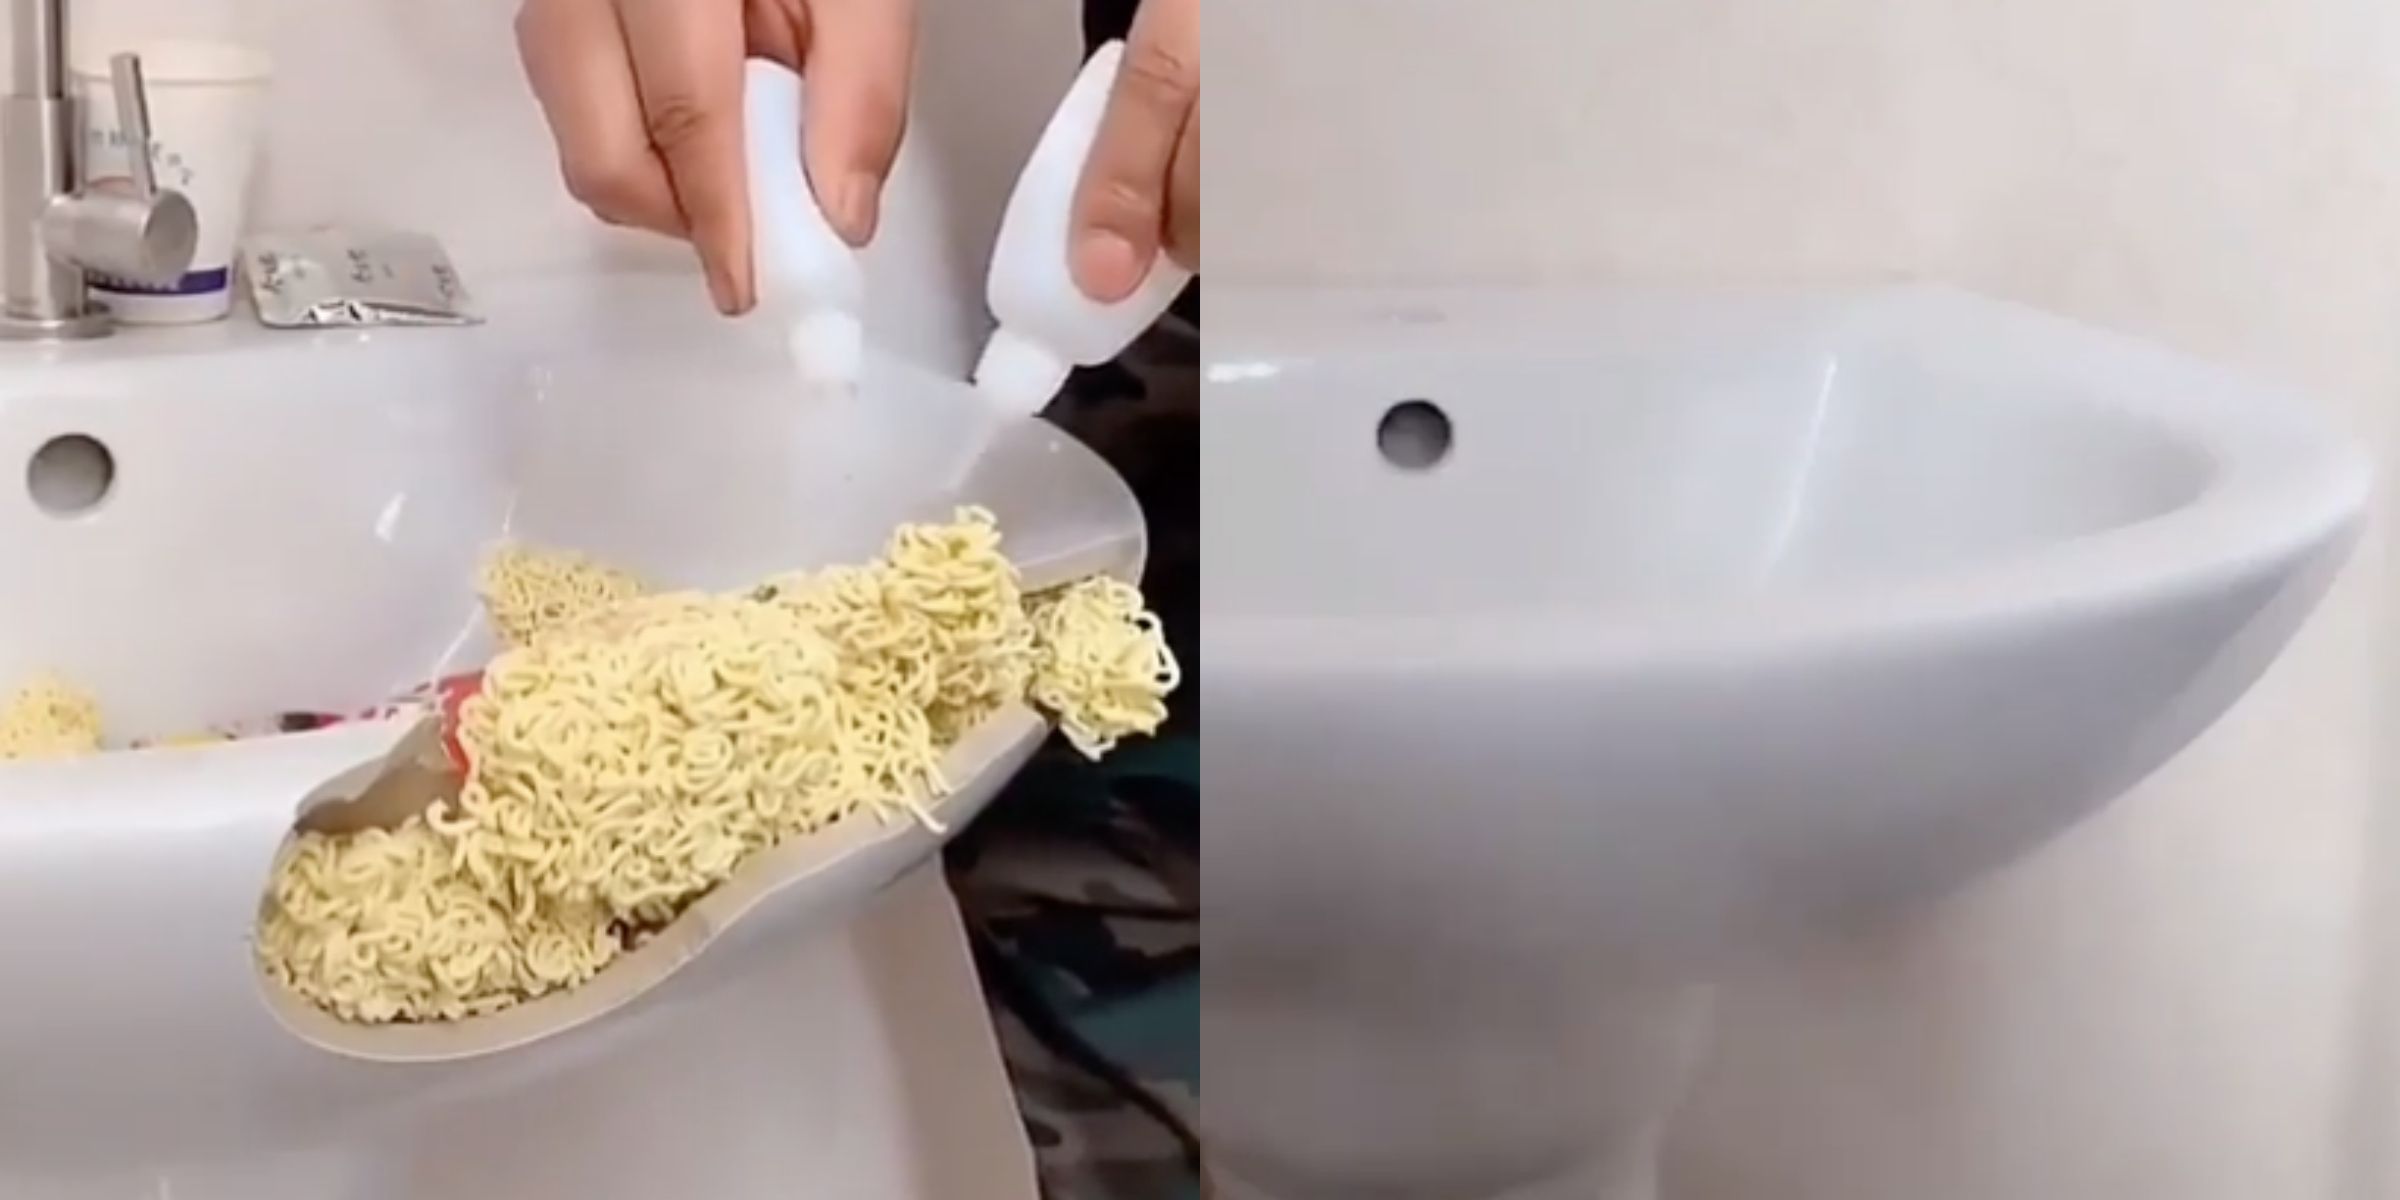 Meningsløs Maladroit Tanke DIYer Repairs a Broken Sink With a Ramen Noodle Packet in Viral Video